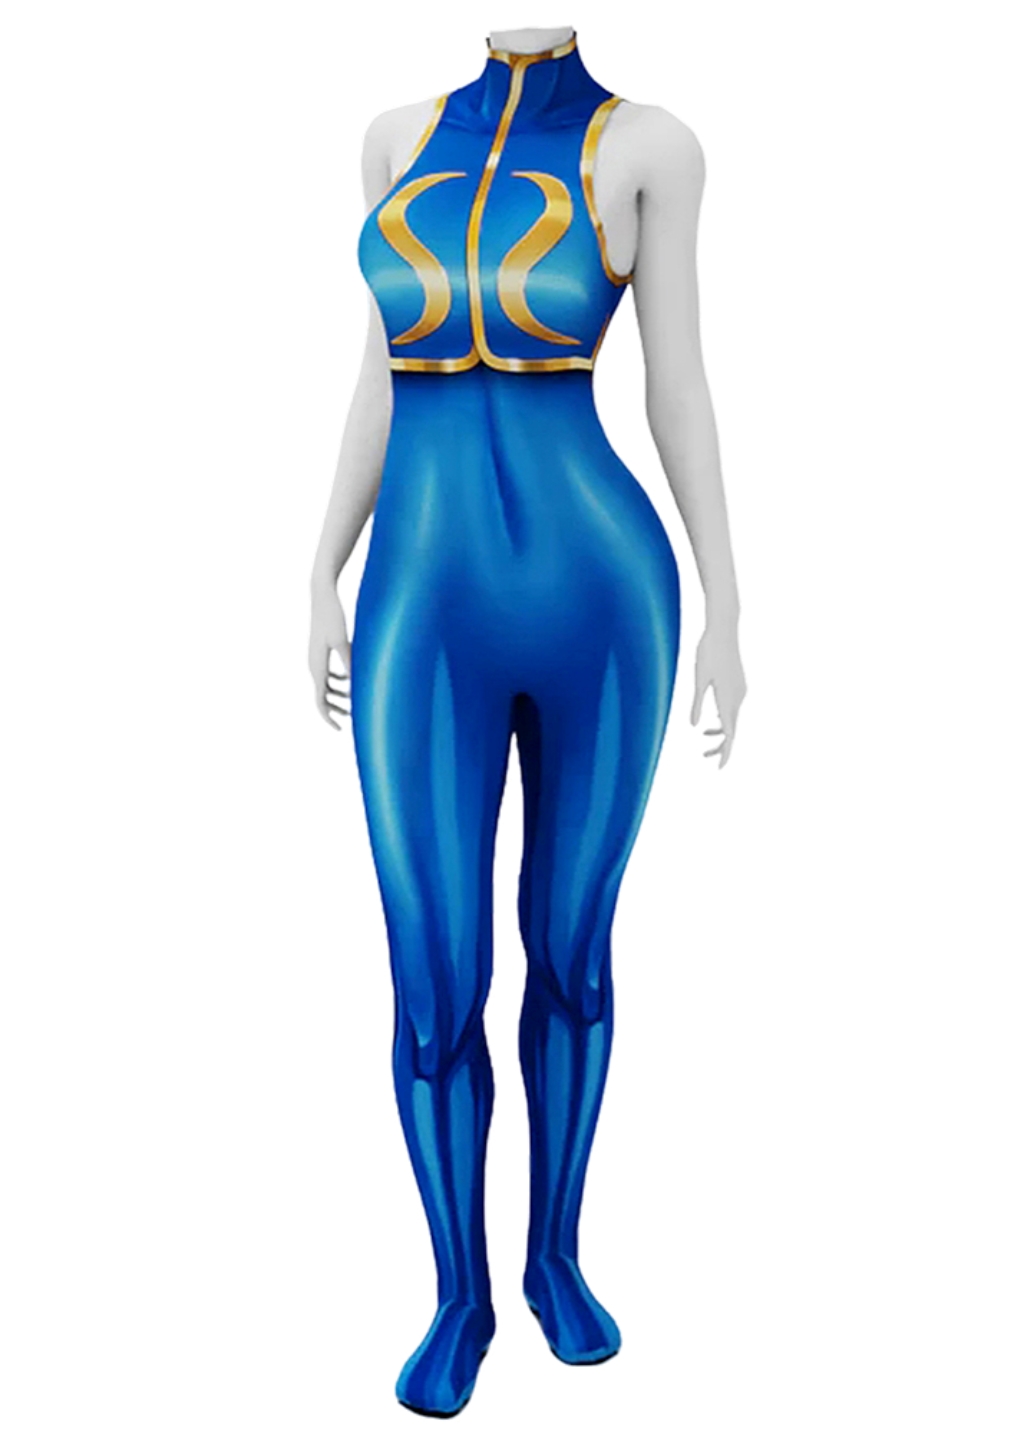 Street Fighter II Costume Chun-Li Bodysuit Cosplay Blue Ver for Adult Kids